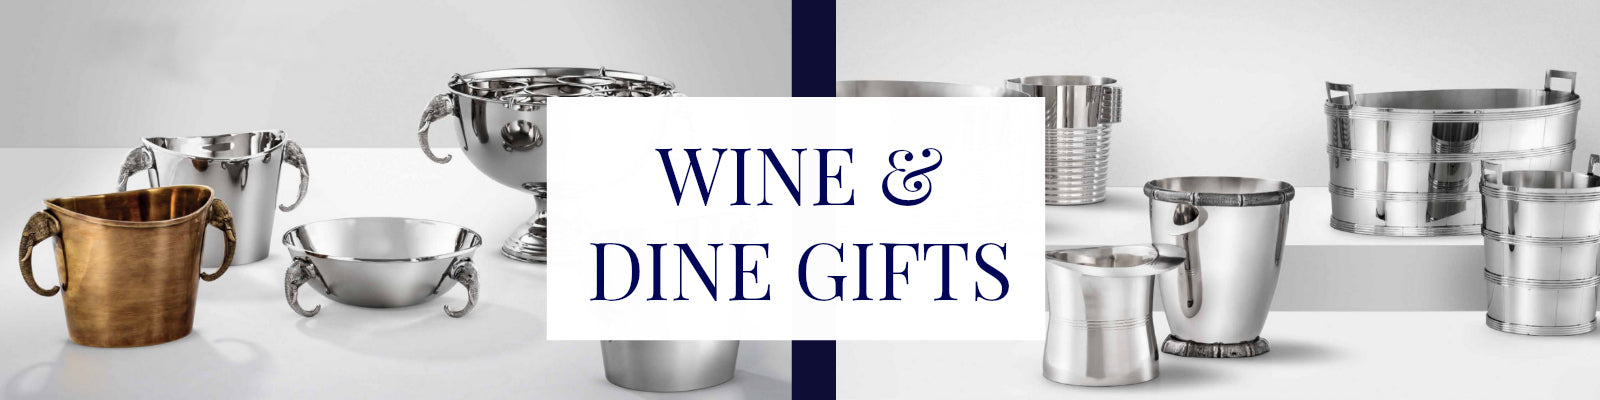 Wine & Dine Gifts